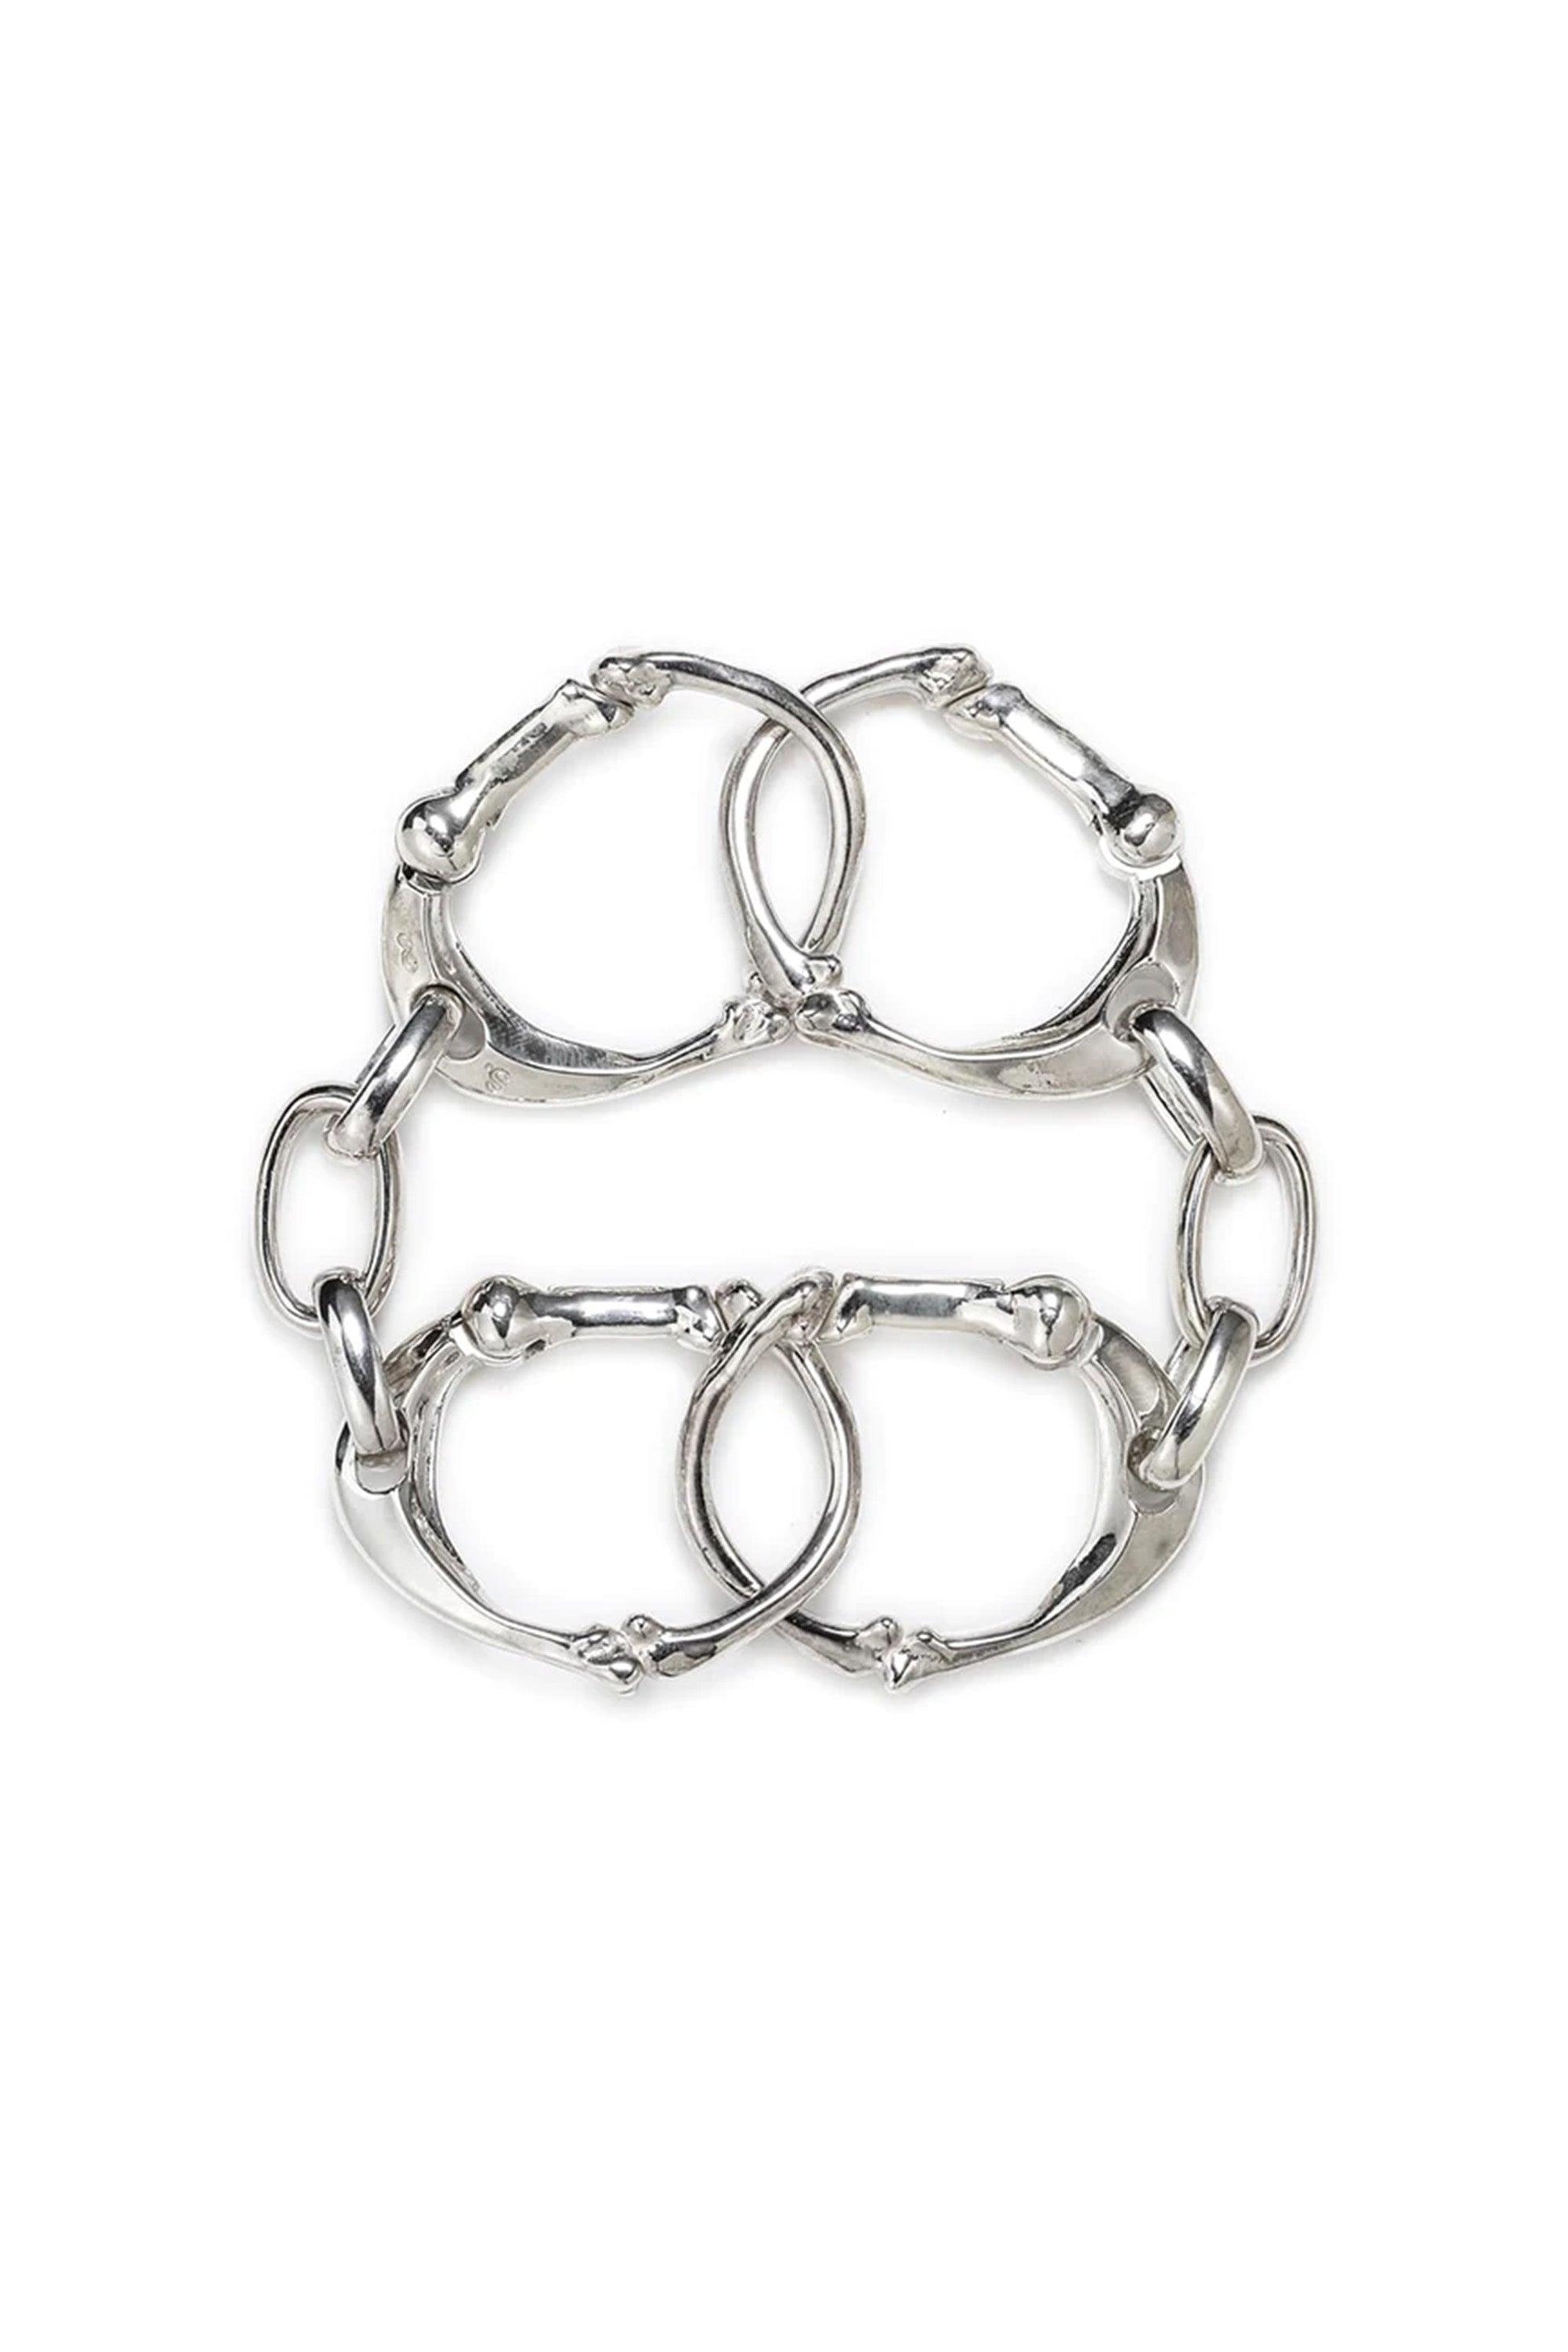 Soloist bone shaped handcuffs bracelet | www.myglobaltax.com